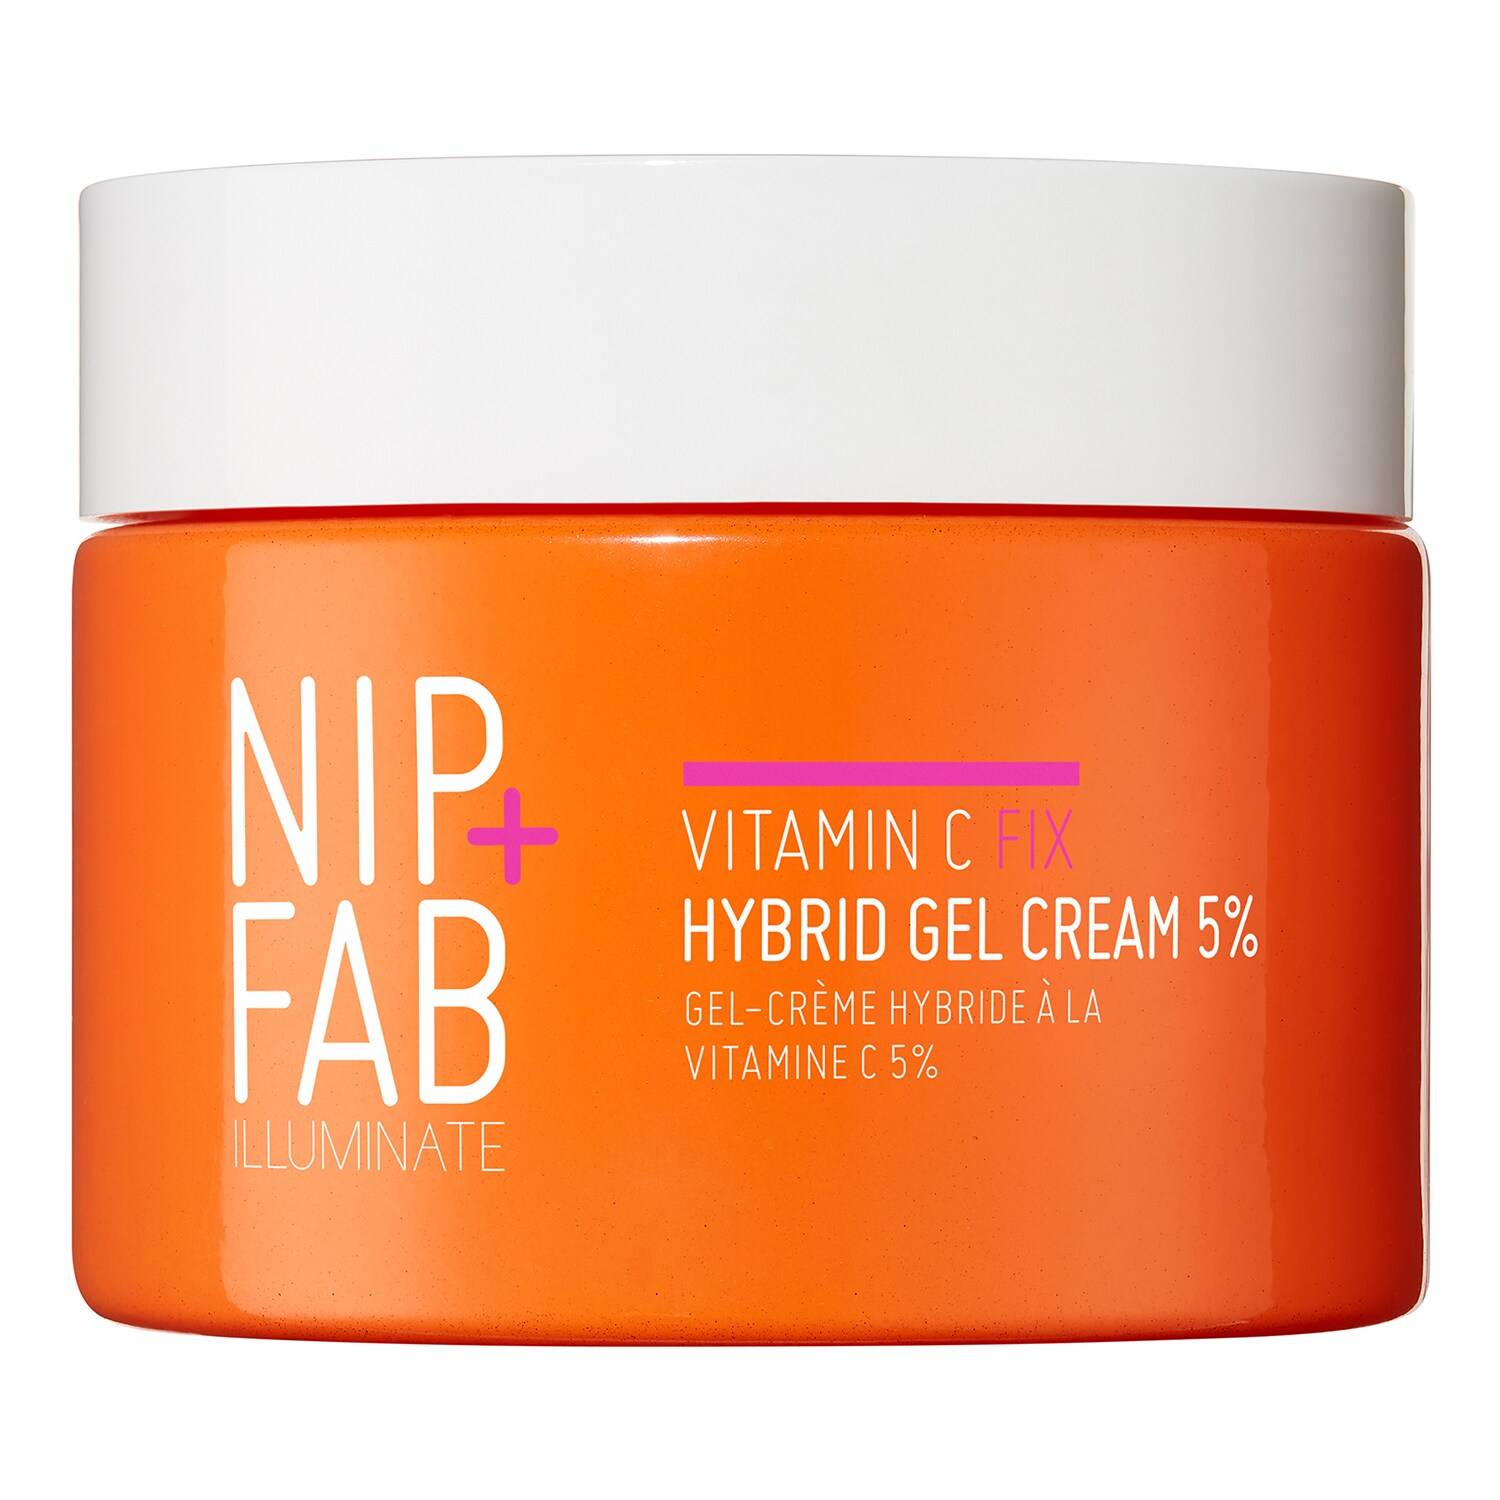 nip+fab vitamin c fix hybrid gel cream 5% 50ml